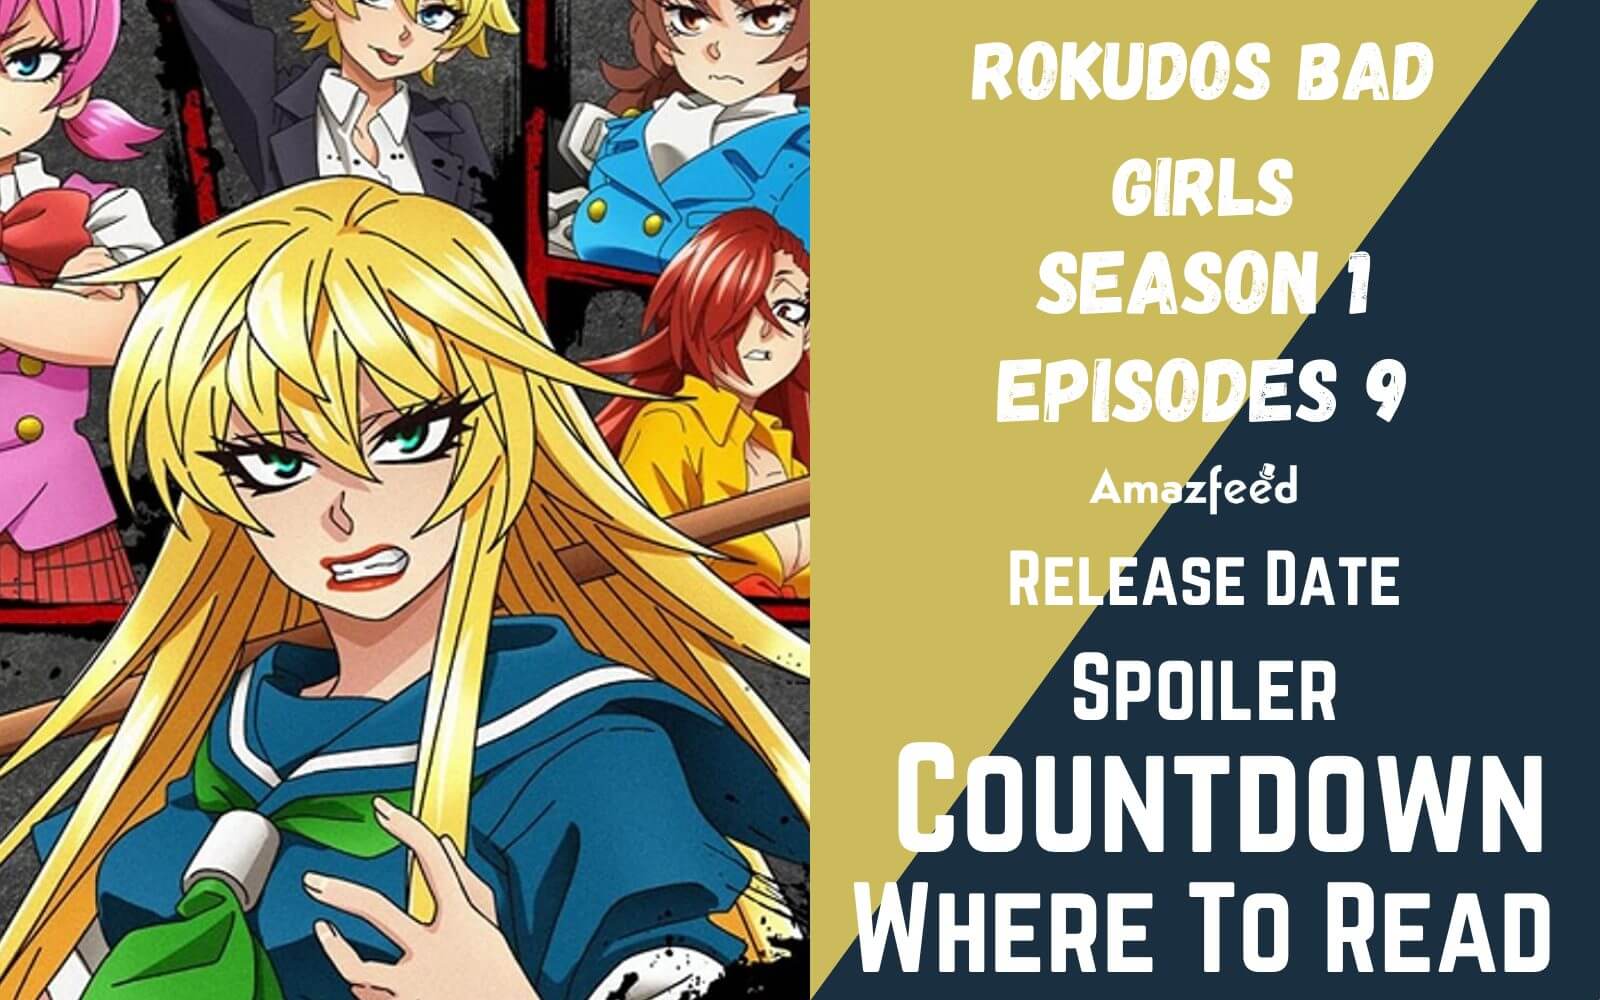 Rokudo's Bad Girls - Wikipedia